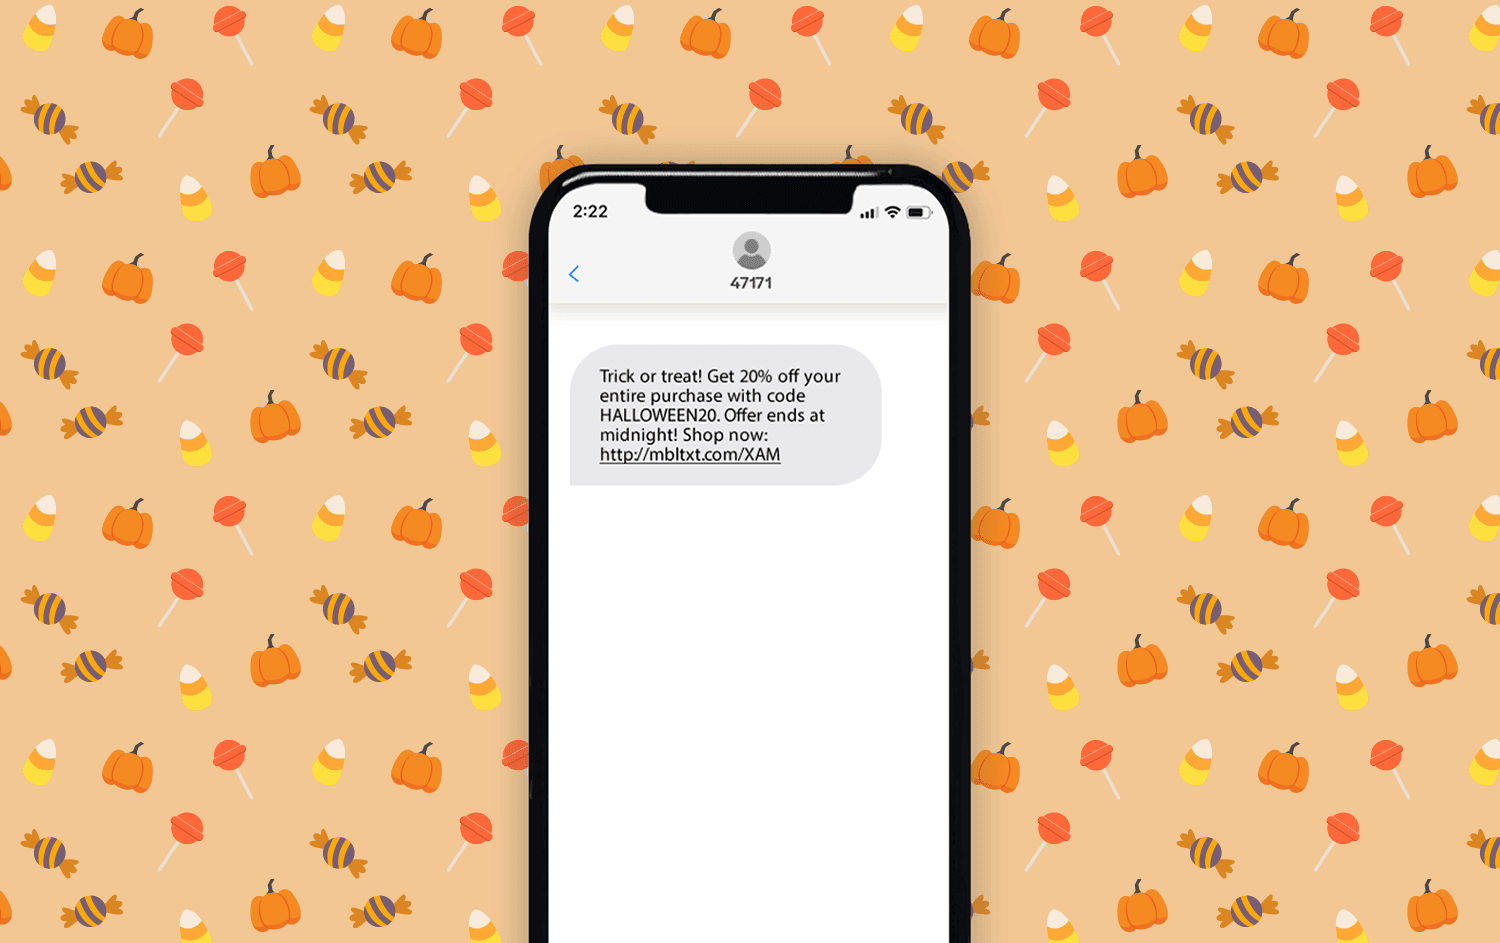 Halloween example text message